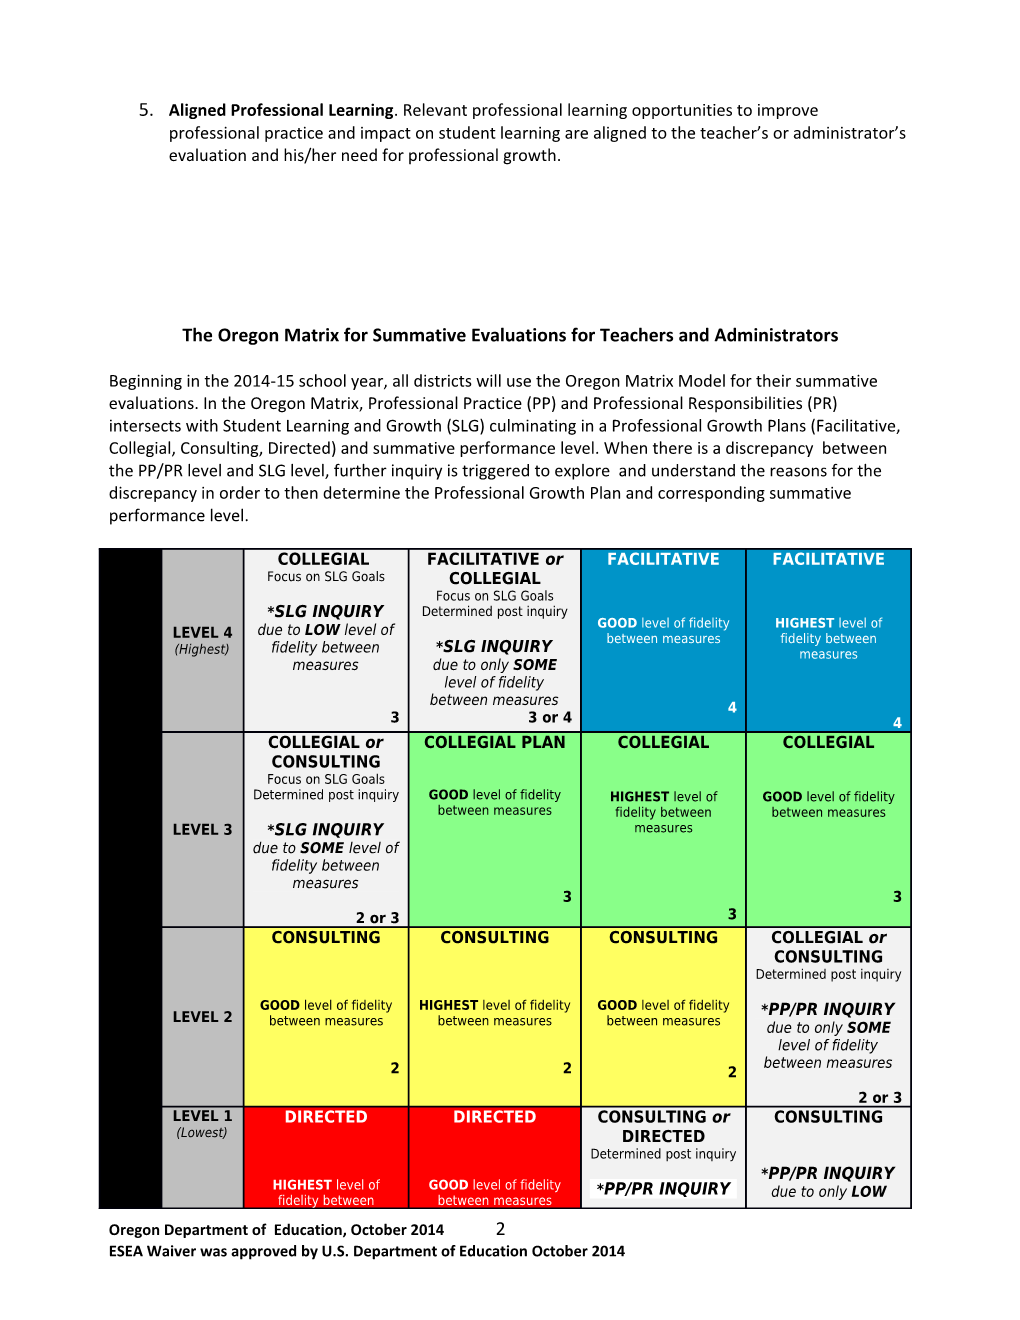 Oregon S Matrix Model for Educator Summative Evaluations